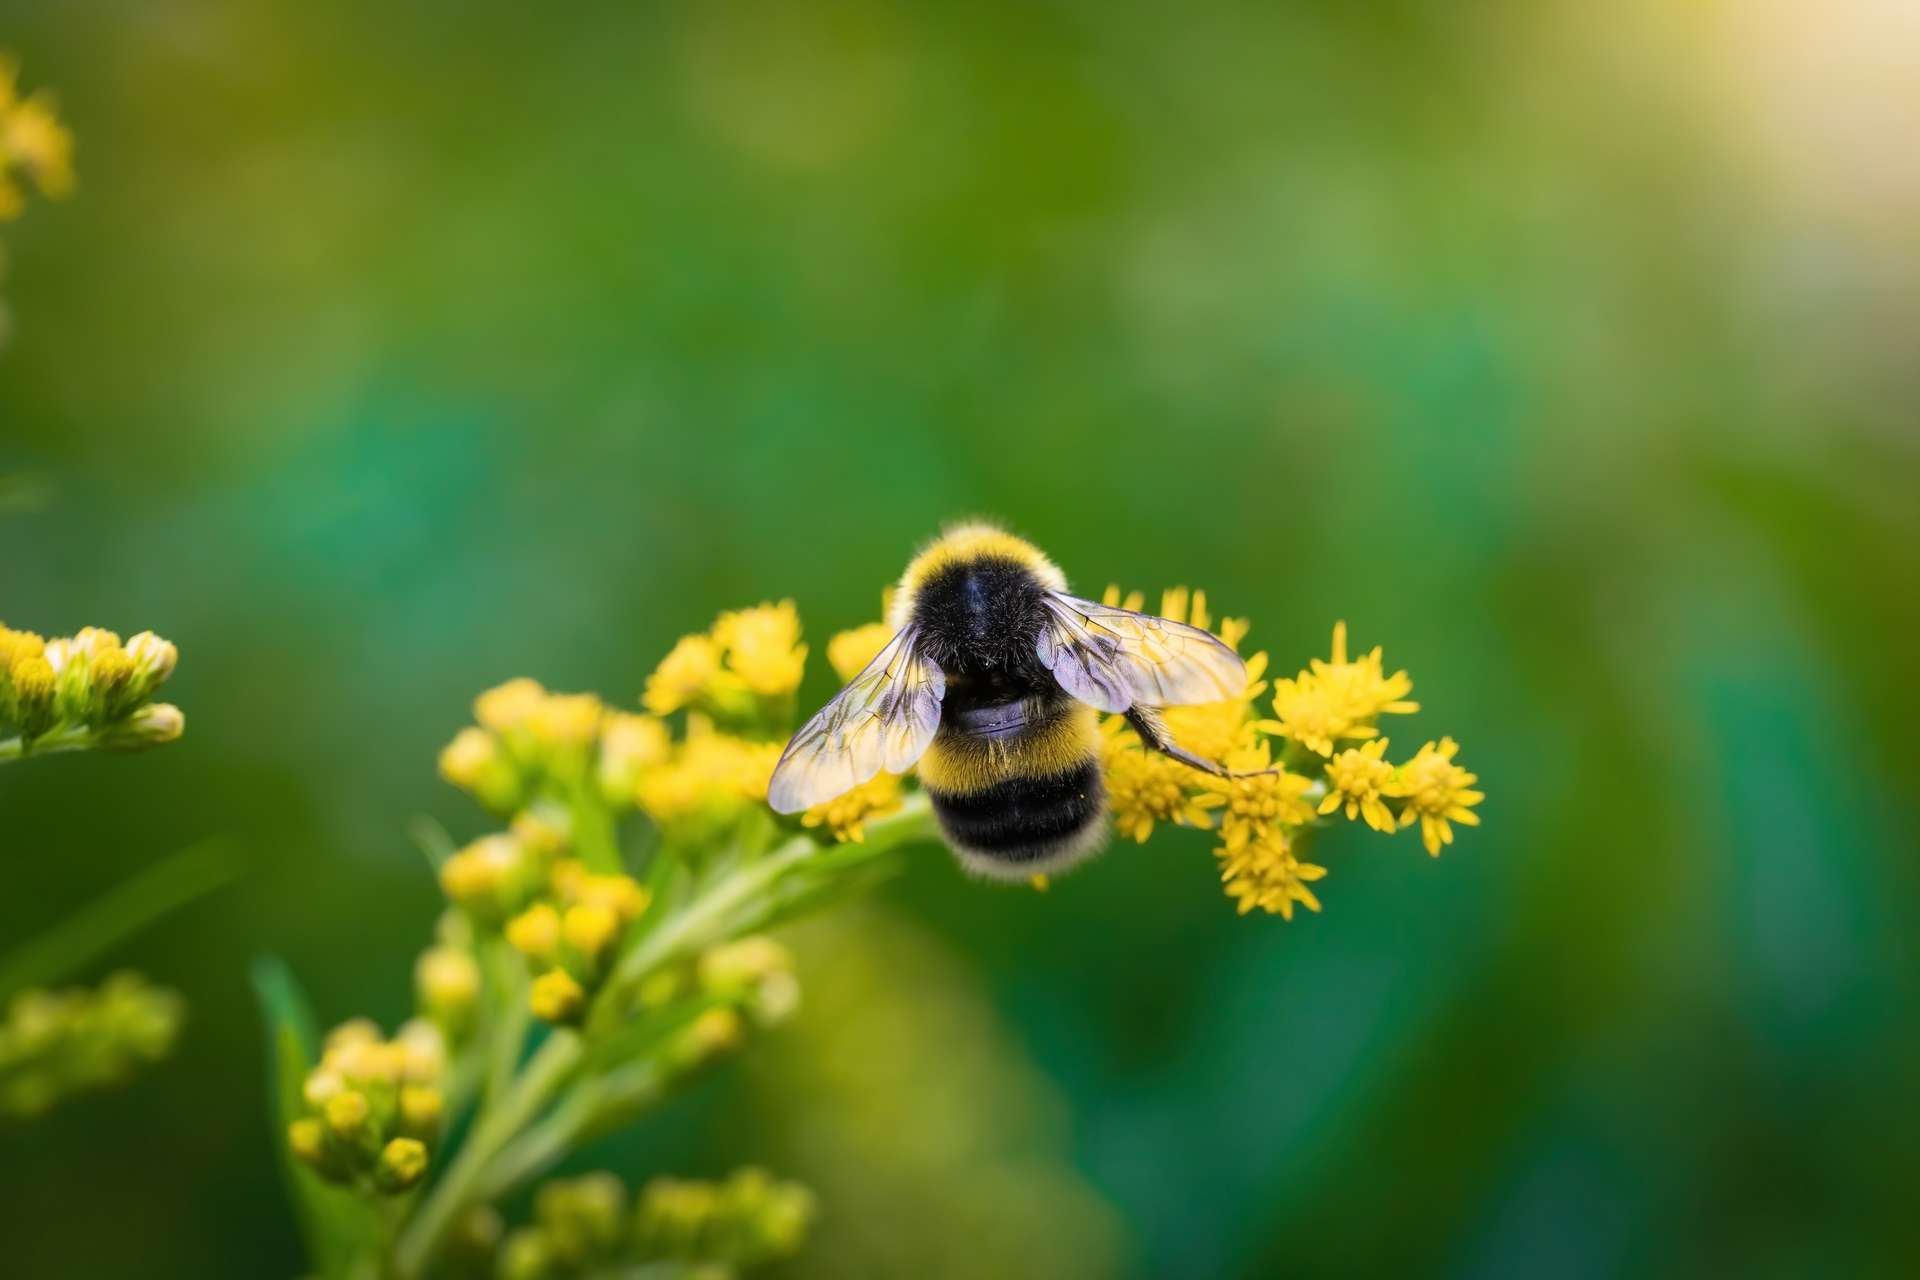 Les insectes pollinisateurs sont indispensables pour l'environnement. © Grigoriy Lukyanov, Adobe Stock